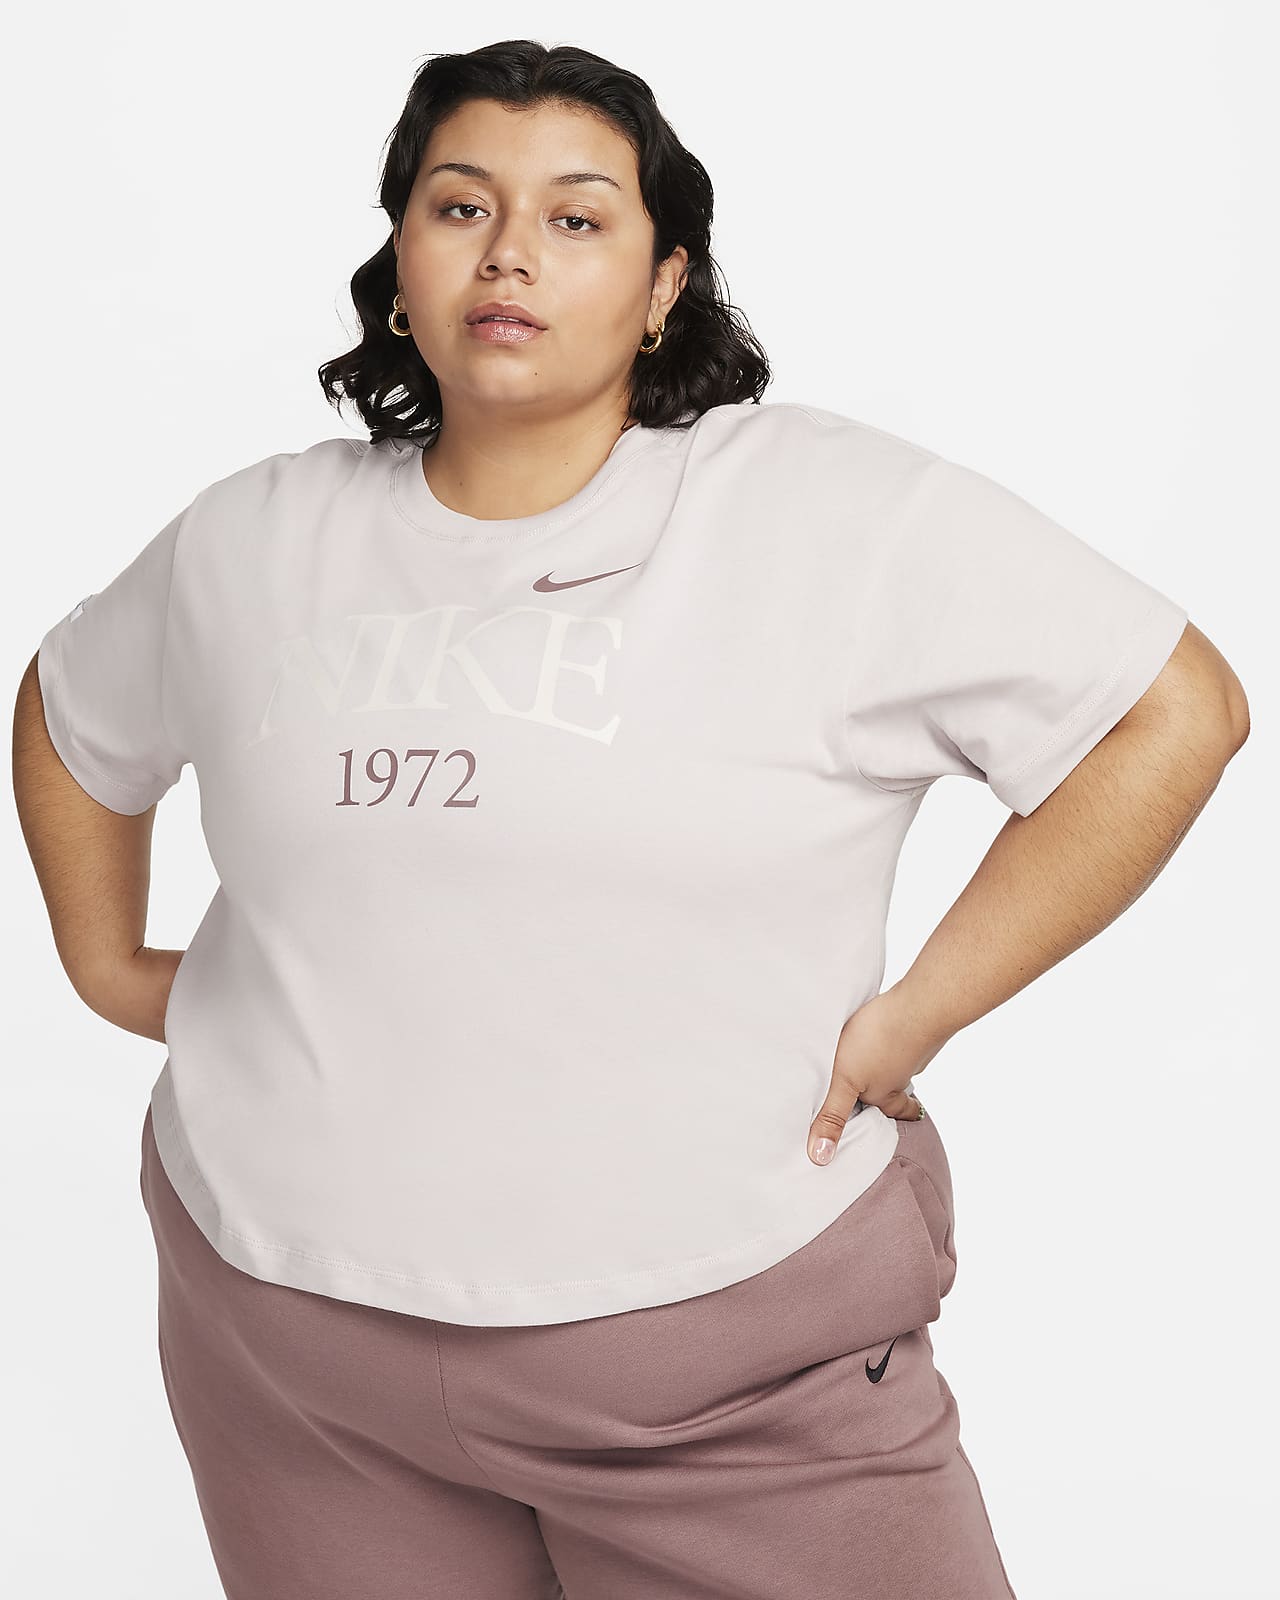 Nike Sportswear Classic Women's T-Shirt (Plus Size)